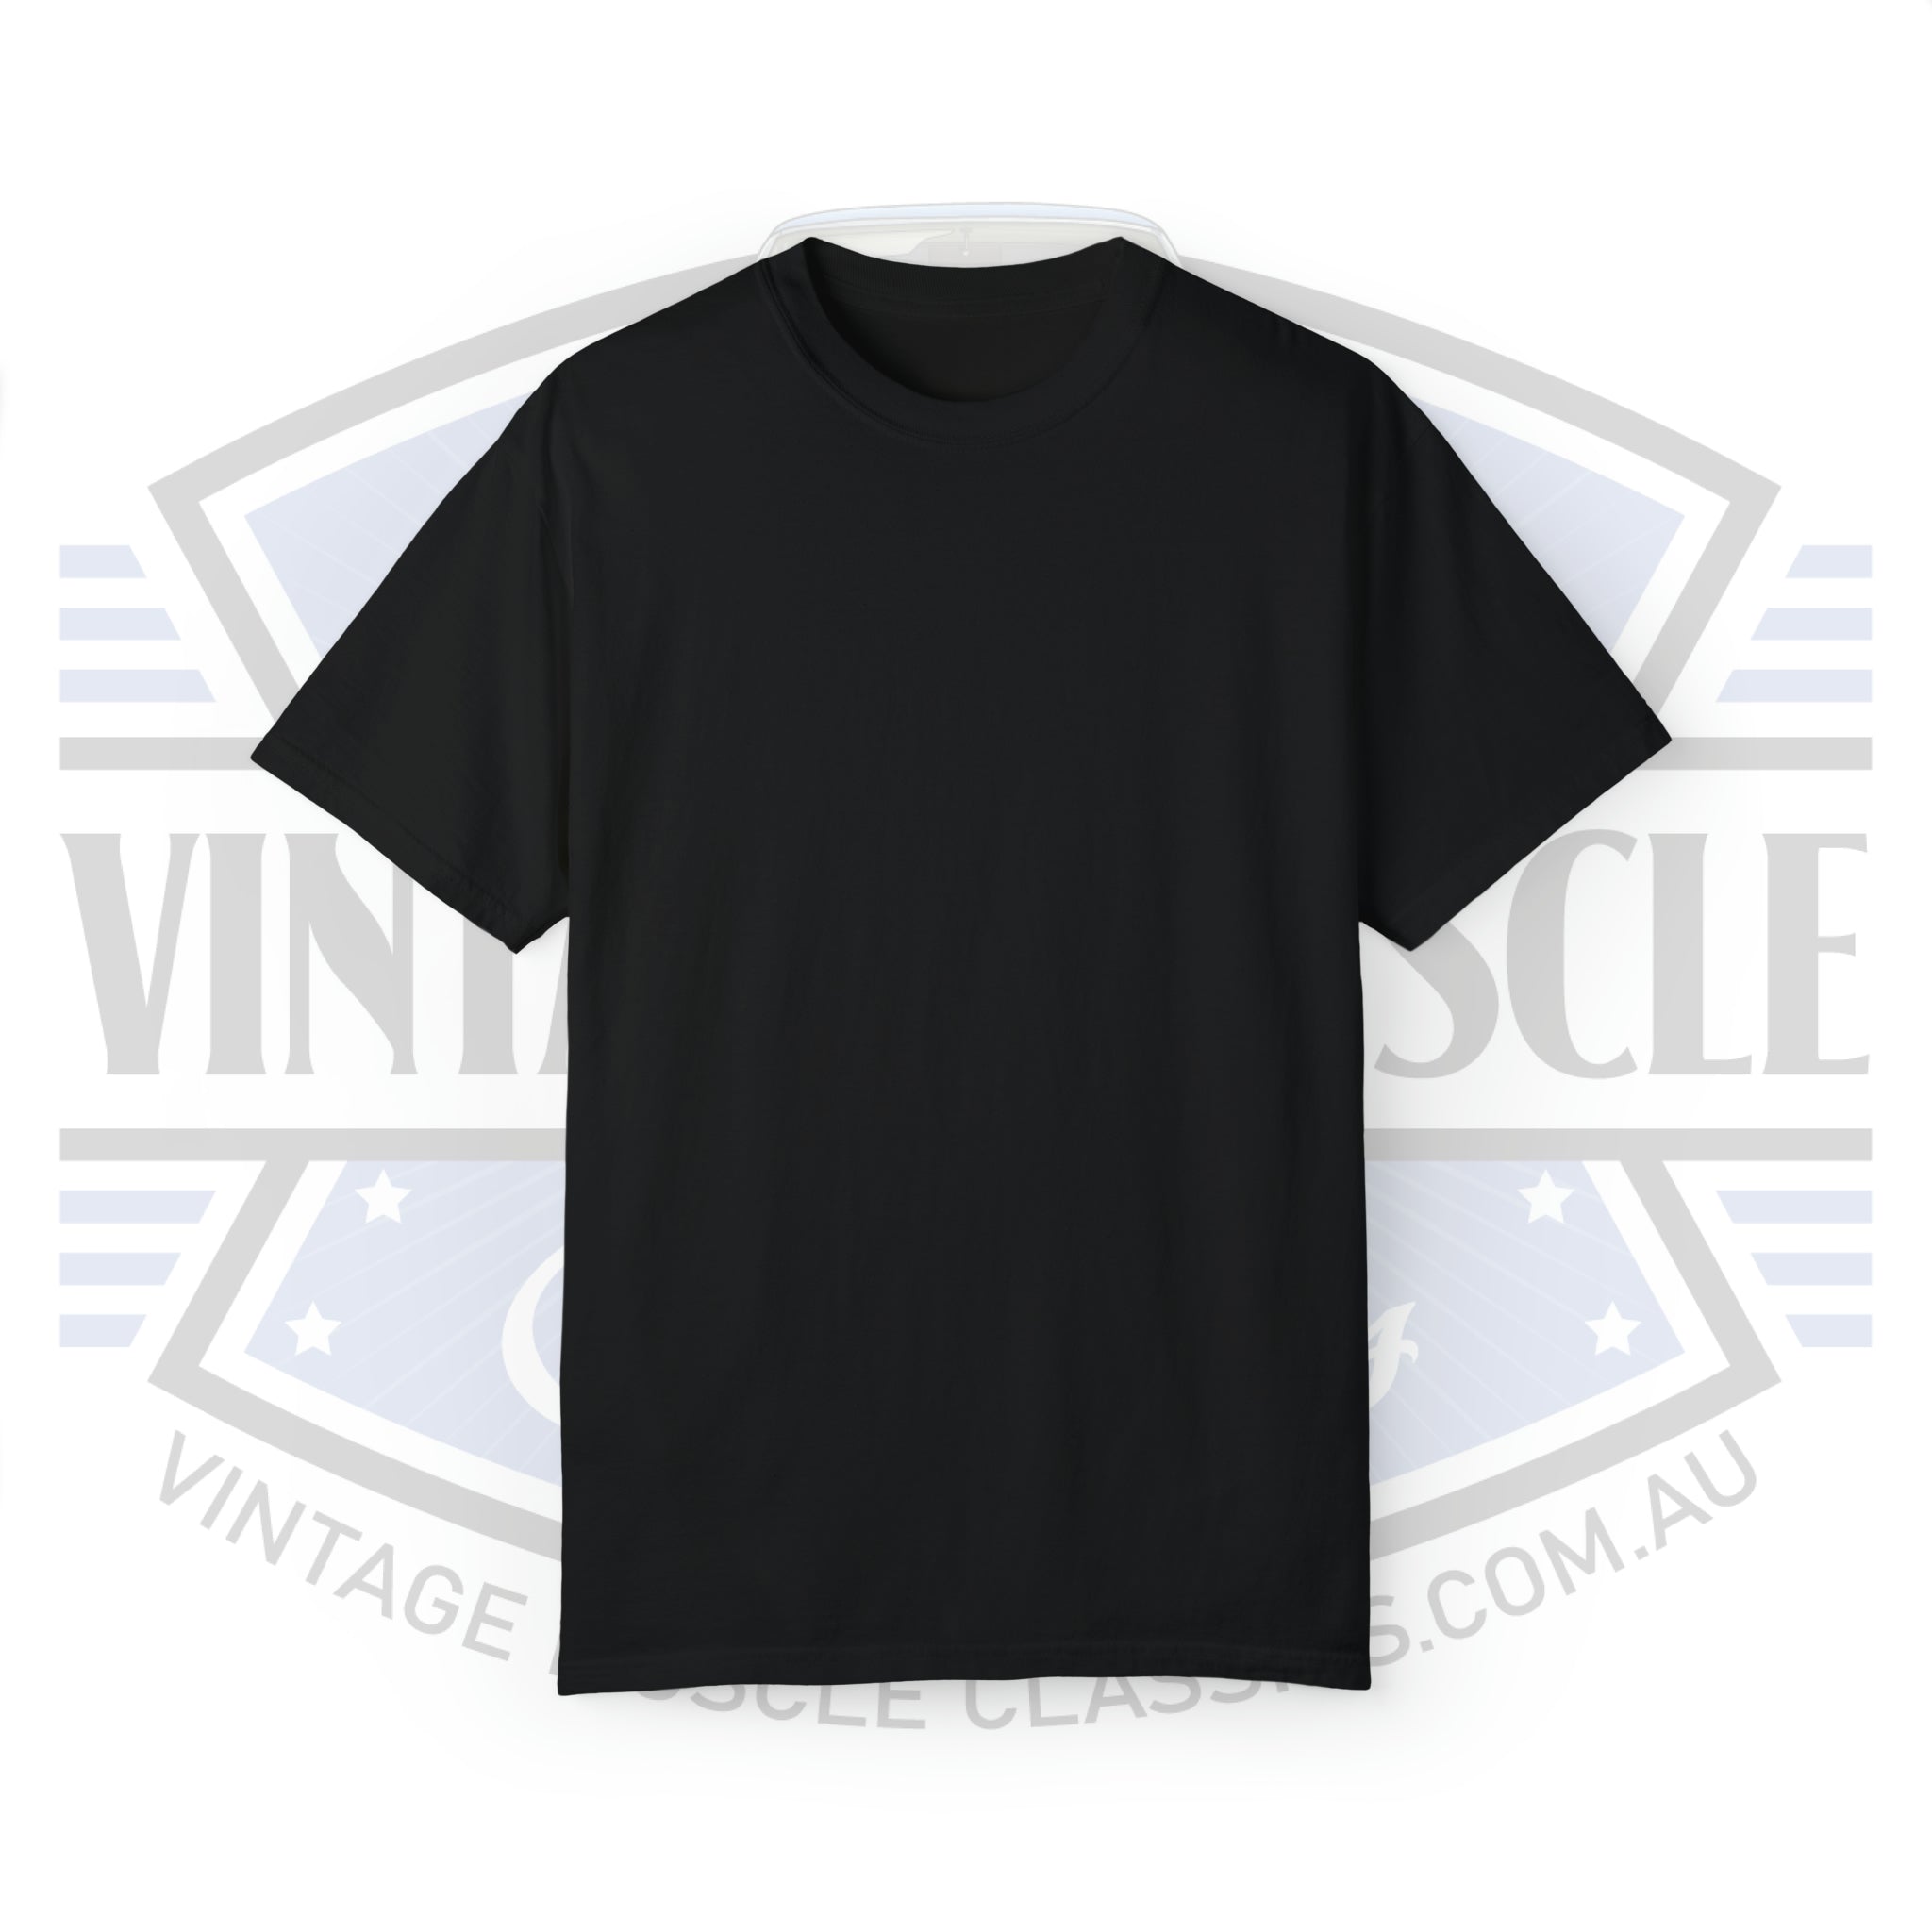 Fairlane ZA - Unisex Garment-Dyed T-shirt